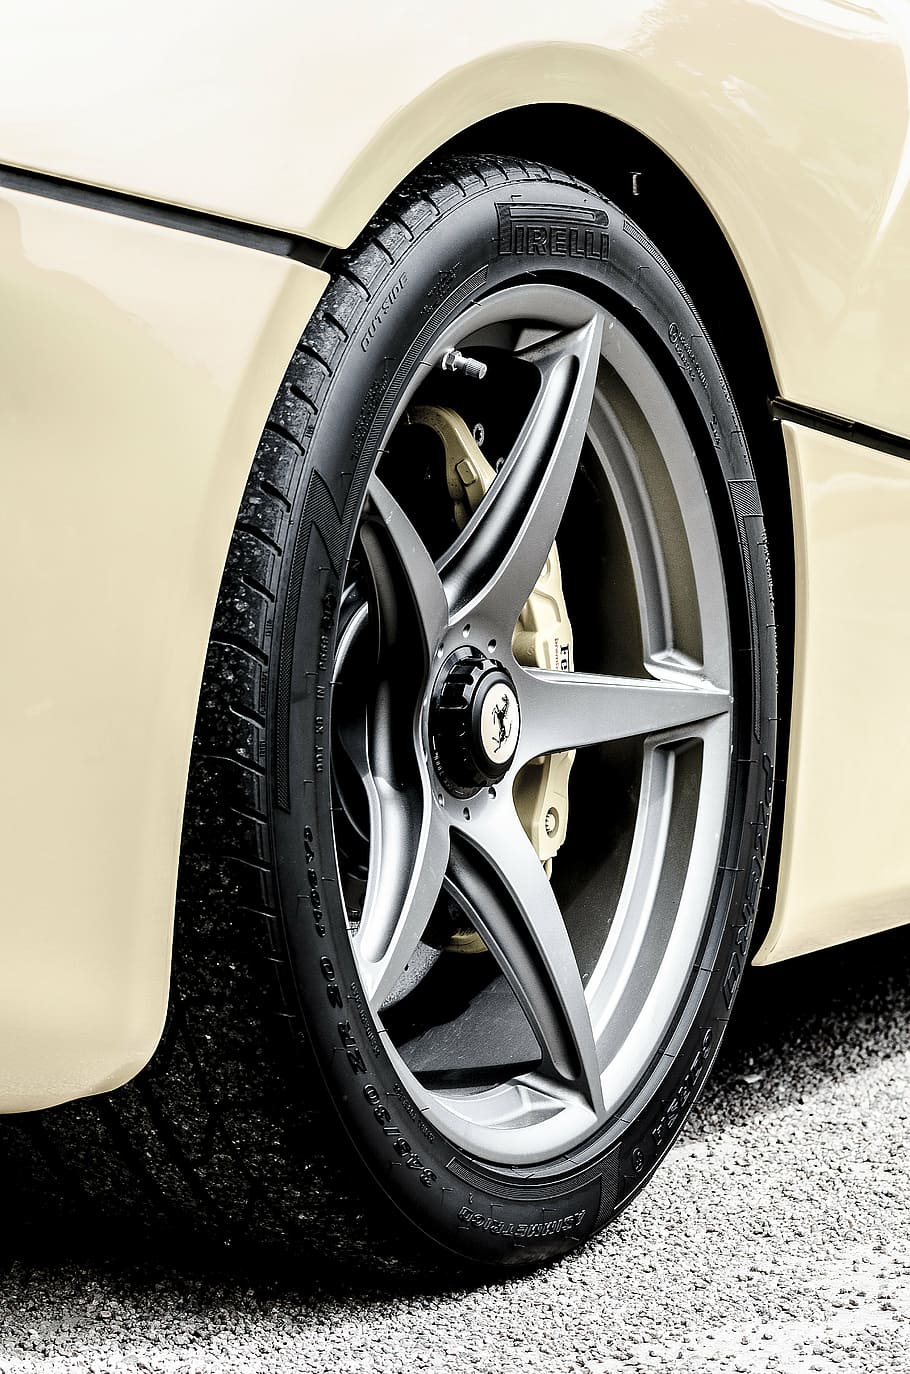 close-up photo of gray Ferrari 5-spoke vehicle wheel with tire